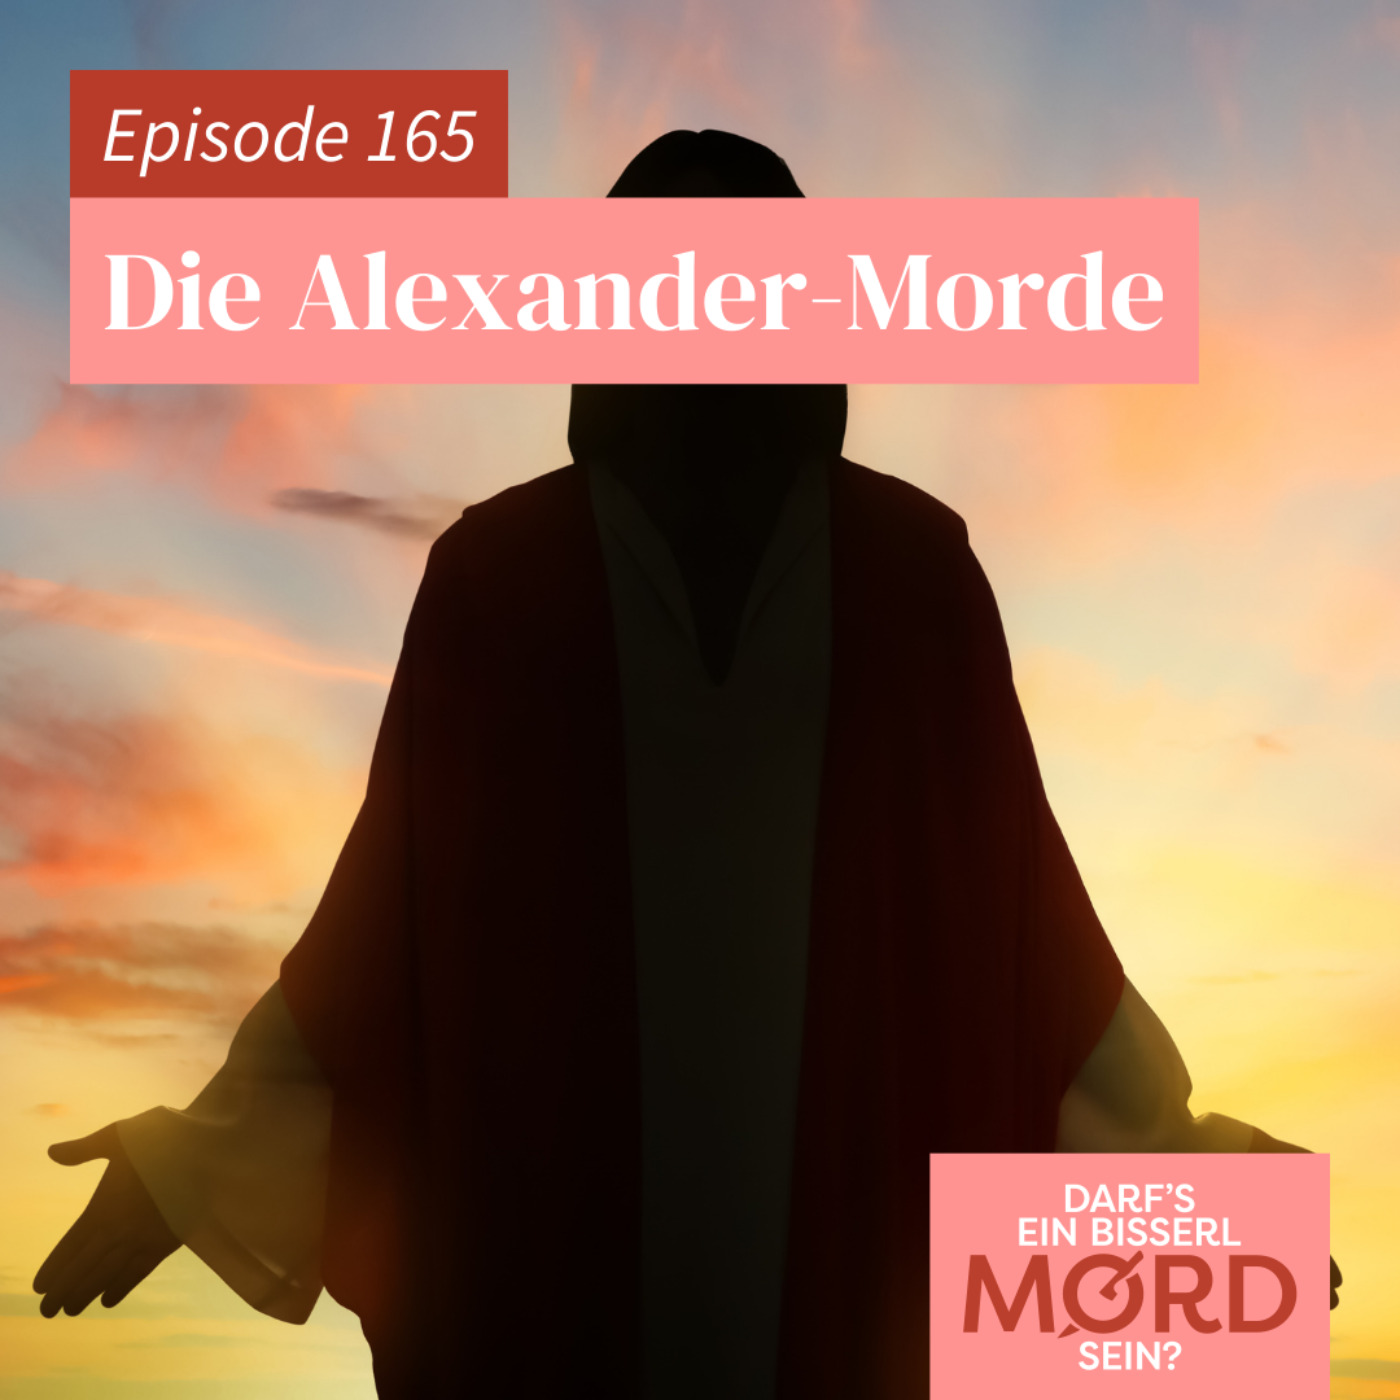 Episode 165: Die Alexander-Morde